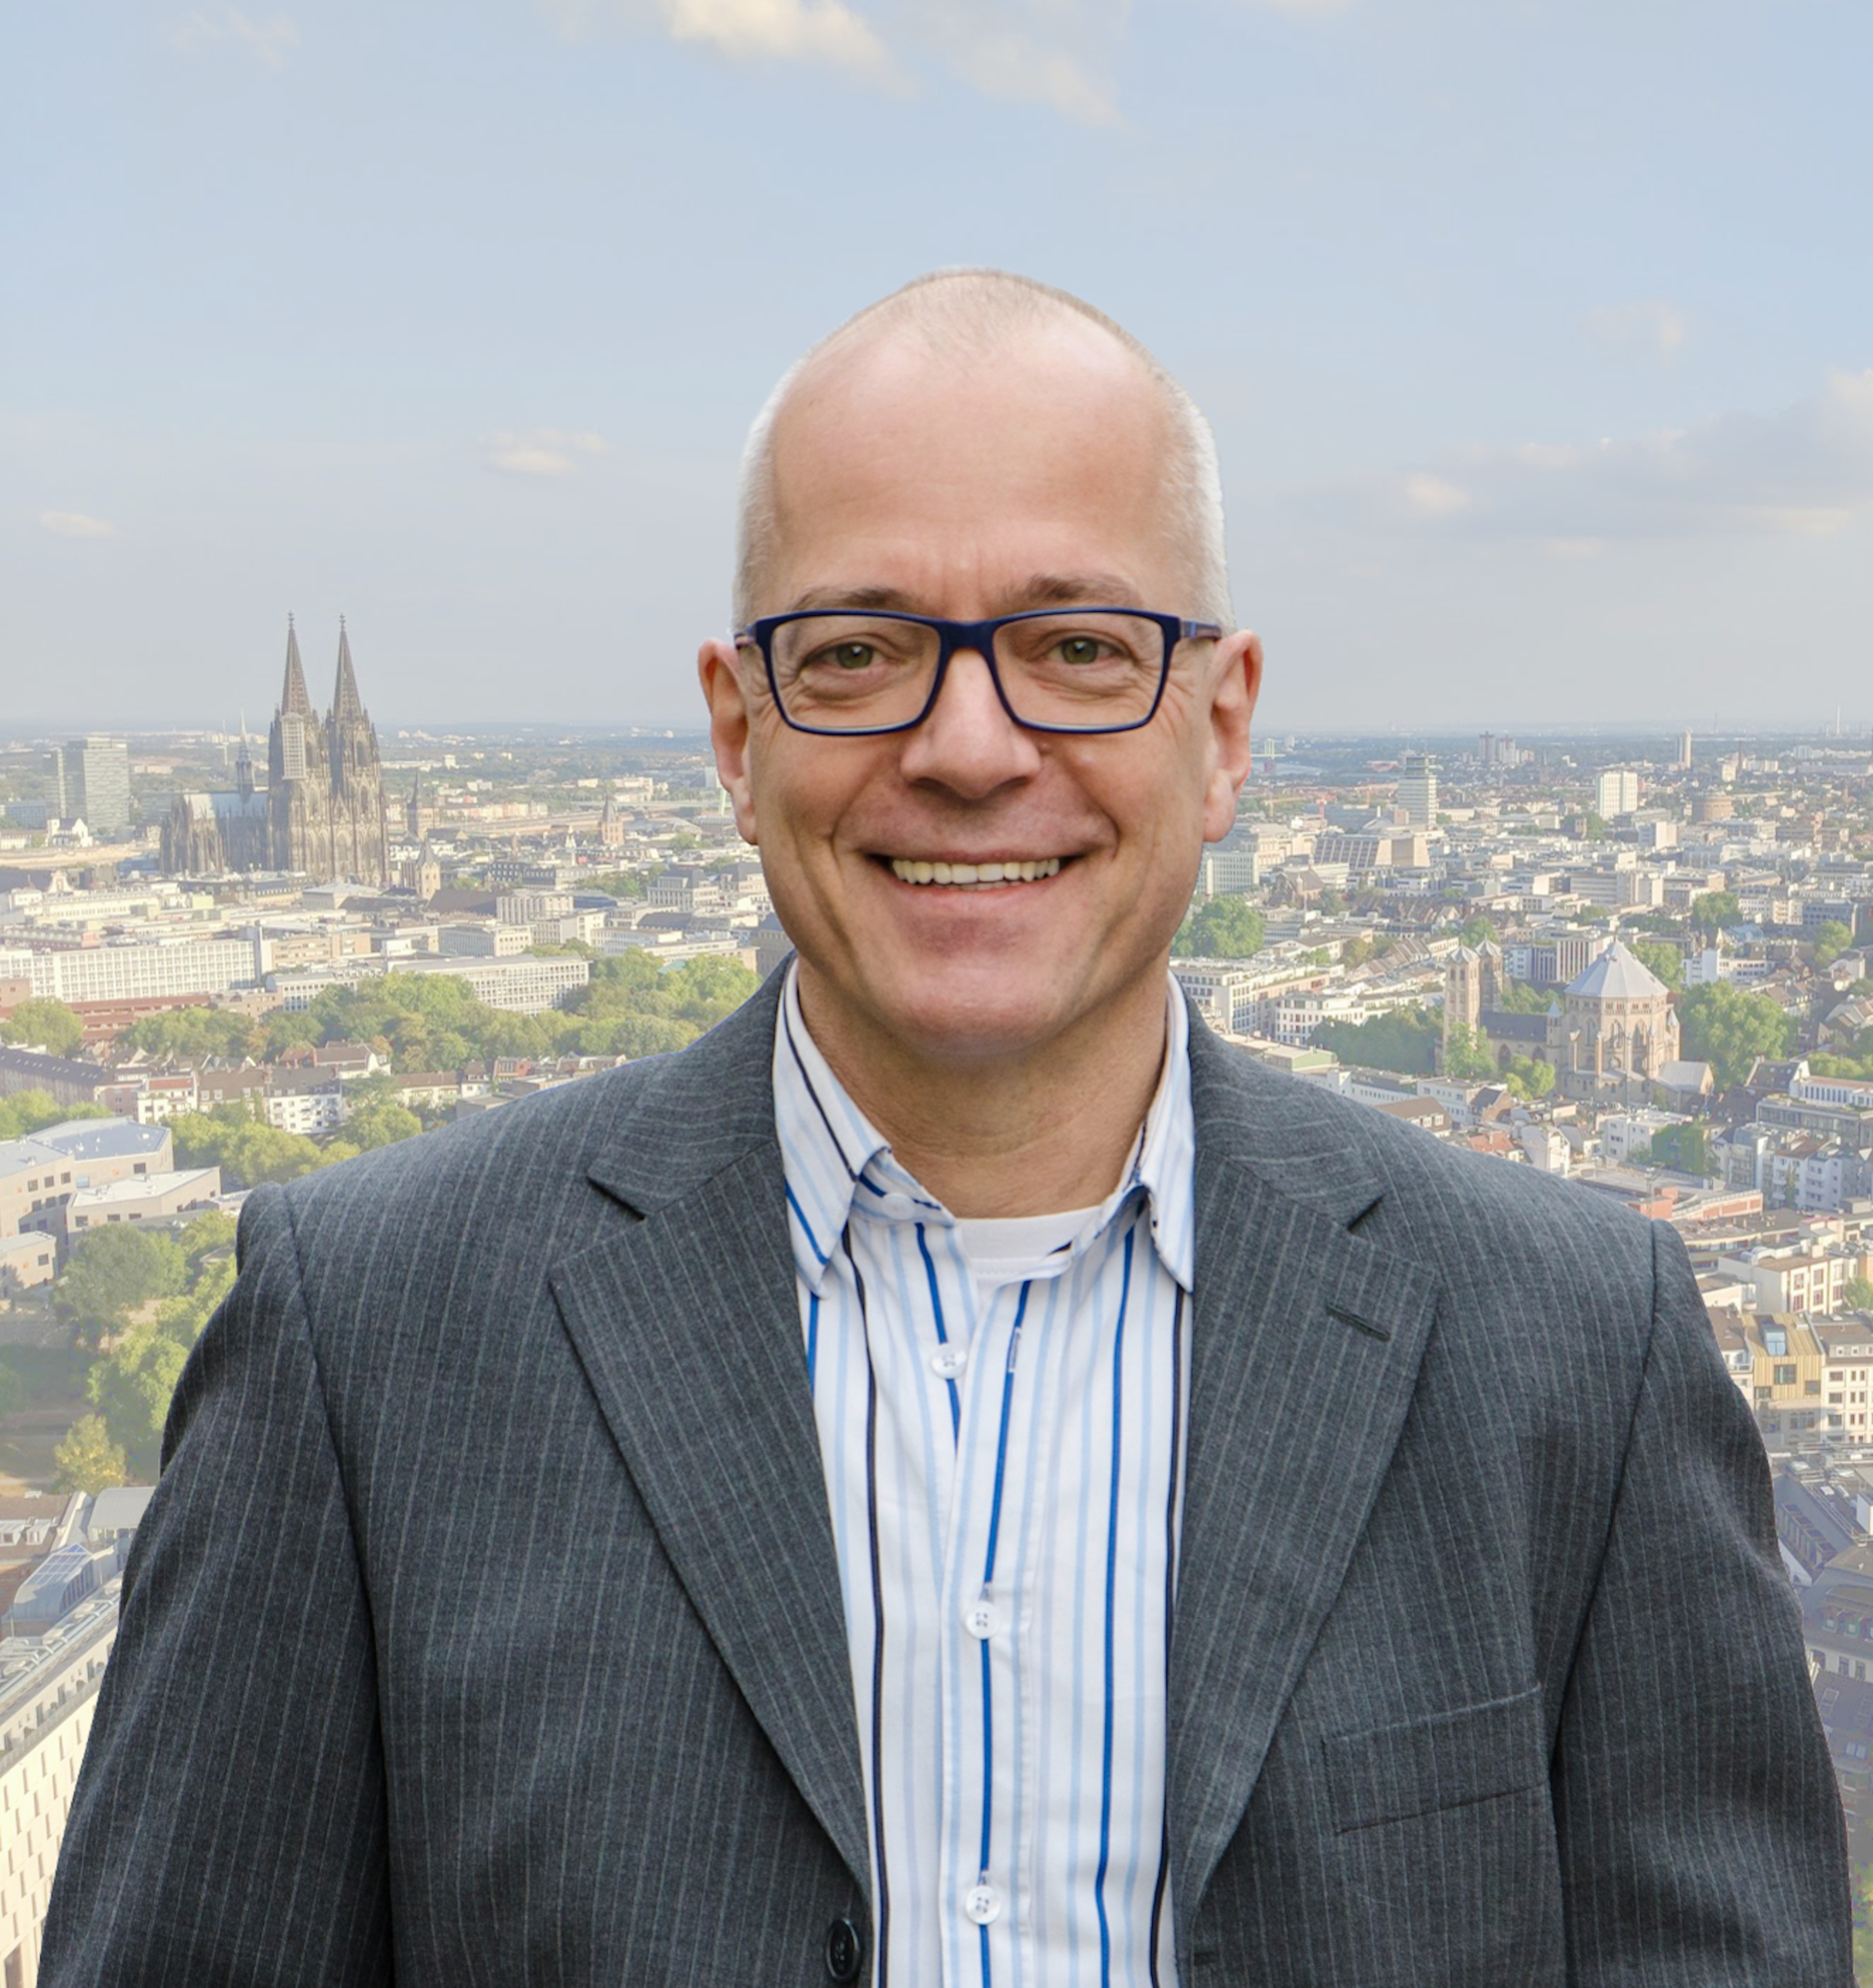 Oberbürgermeister Kandidat Robert Nussholz Köln 2020